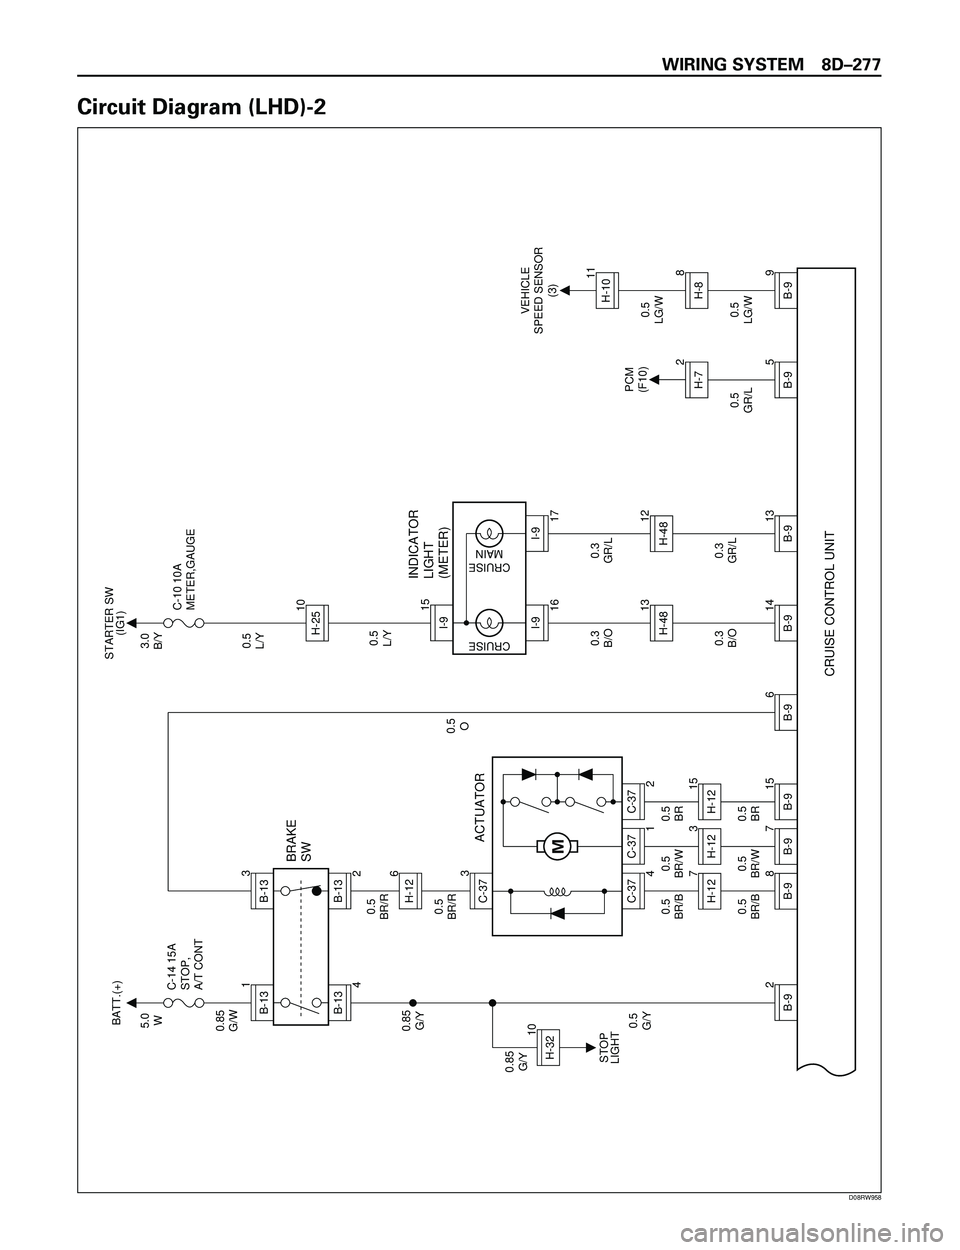 ISUZU TROOPER 1998  Service Owners Guide WIRING SYSTEM 8DÐ277
Circuit Diagram (LHD)-2
0.5
O
0.5
BR/B0.5
BR/R0.5
BR/R
0.5
BR/B 5.0
W
0.85
G/W
0.85
G/Y
0.5
G/Y 0.85
G/YC-14 15A
STOP,
A/T CONT
ACTUATOR BRAKE
SW
INDICATOR
LIGHT
(METER)
CRUISE C